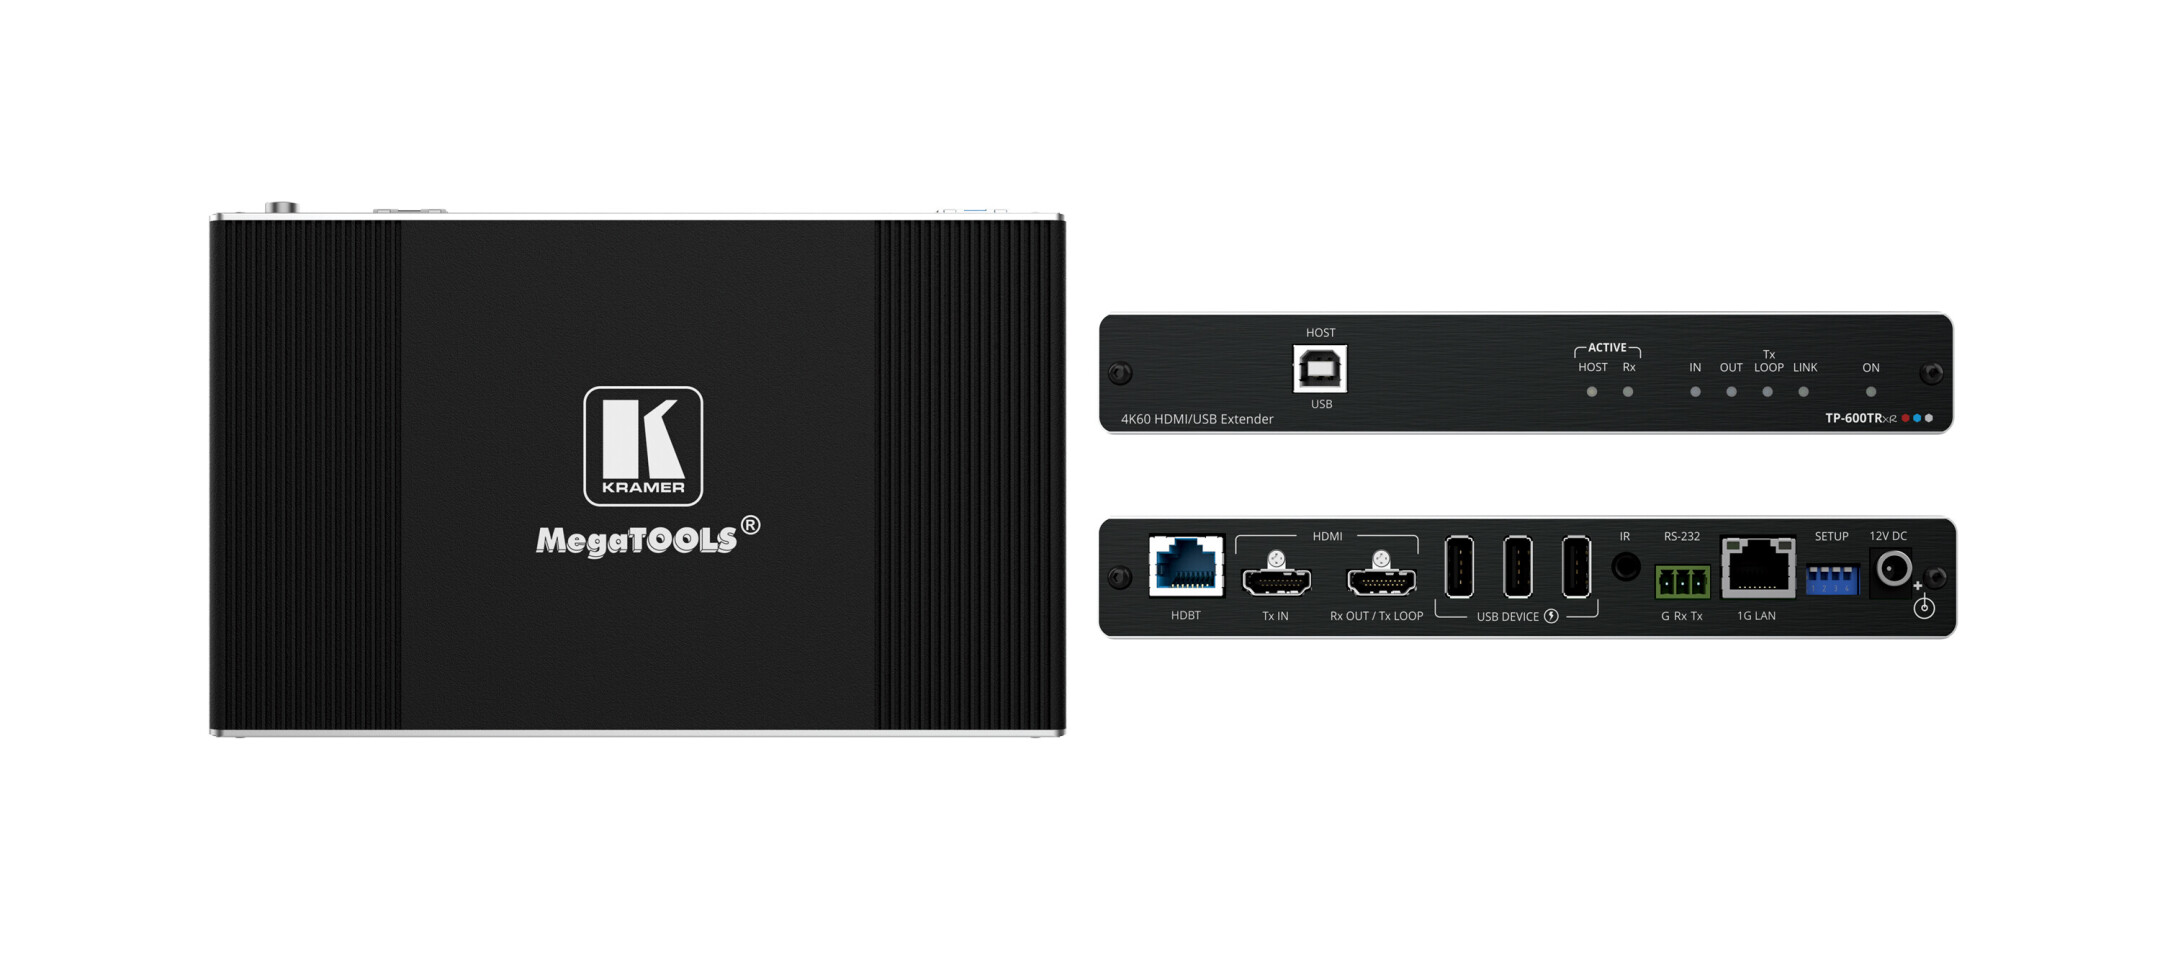 Kramer-TP-600TRxr-4K60-4-4-4-HDMI-Extender-met-USB-Ethernet-RS-232-Infrarood-via-HDBaseT-3-0